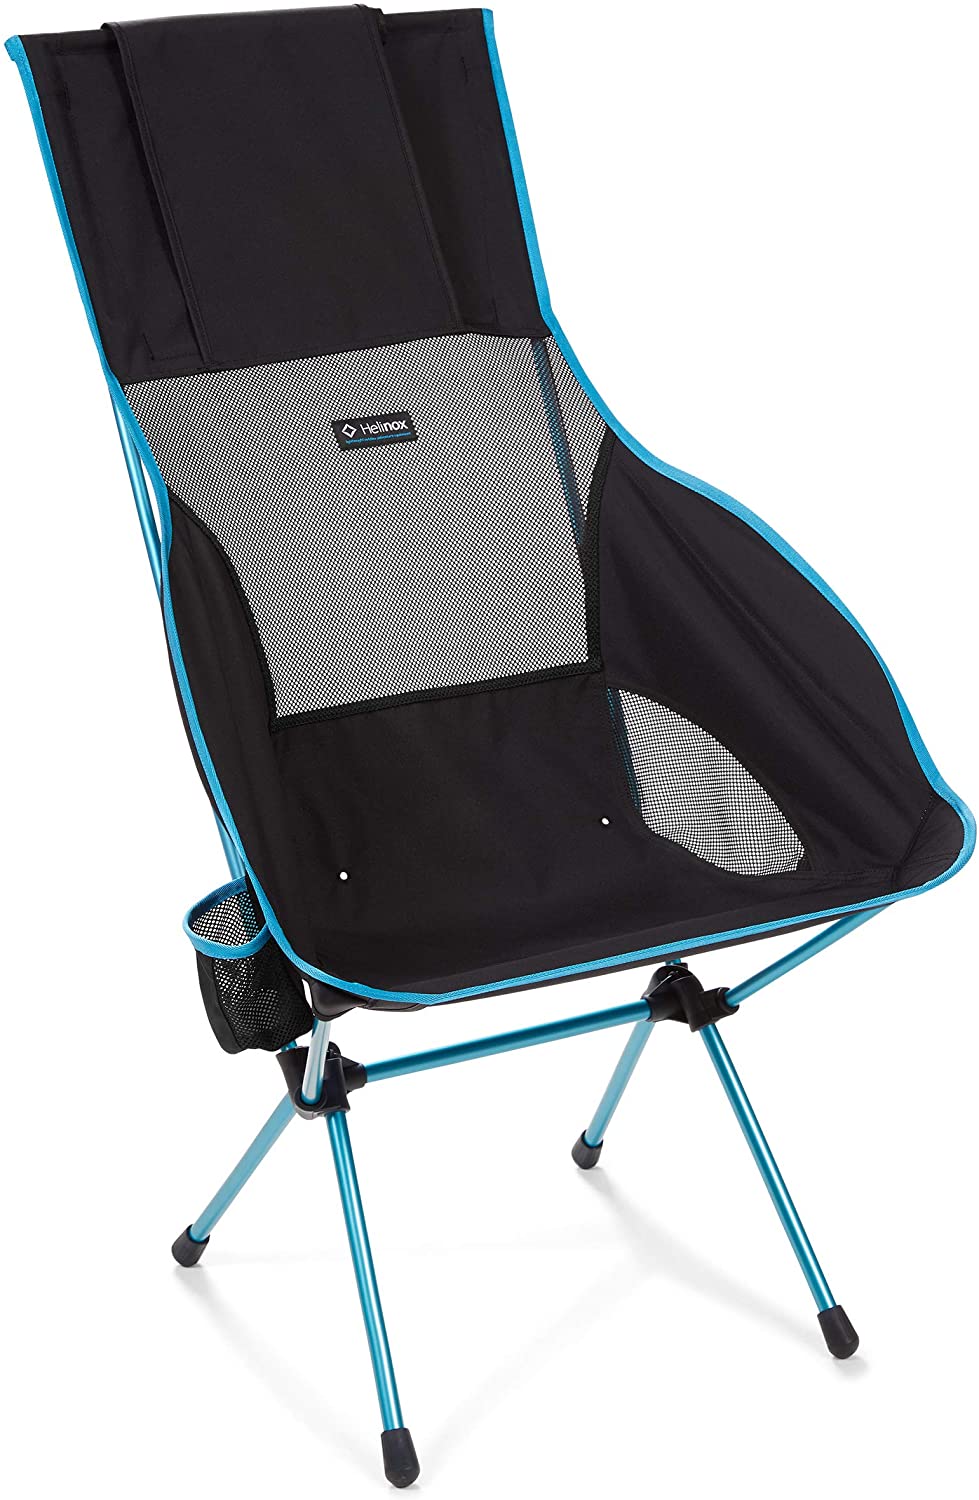 Helinox Savanna Chair - Campingstuhl